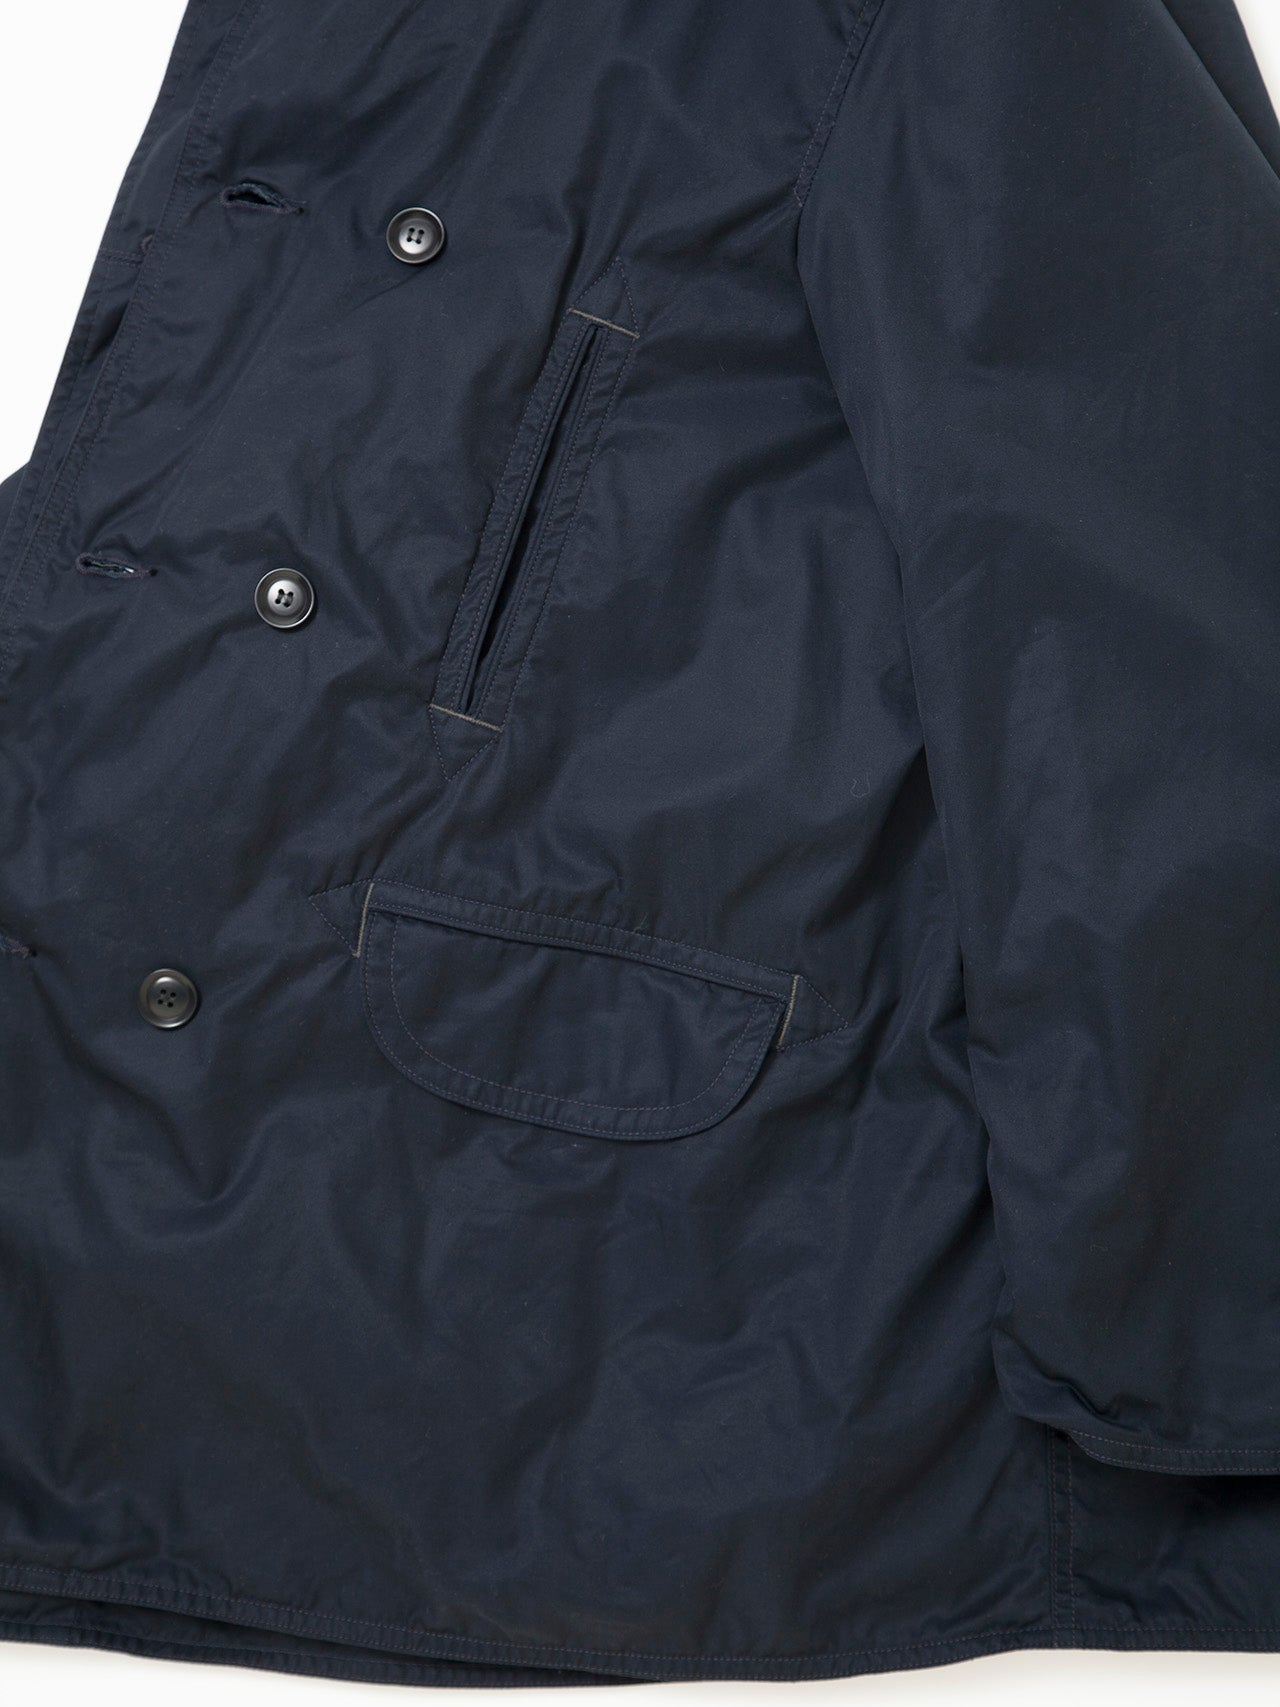 CJ009 - CORONA・Utility Mackinaw Coat / High Density Cotton Gabardine - Midnight Navy